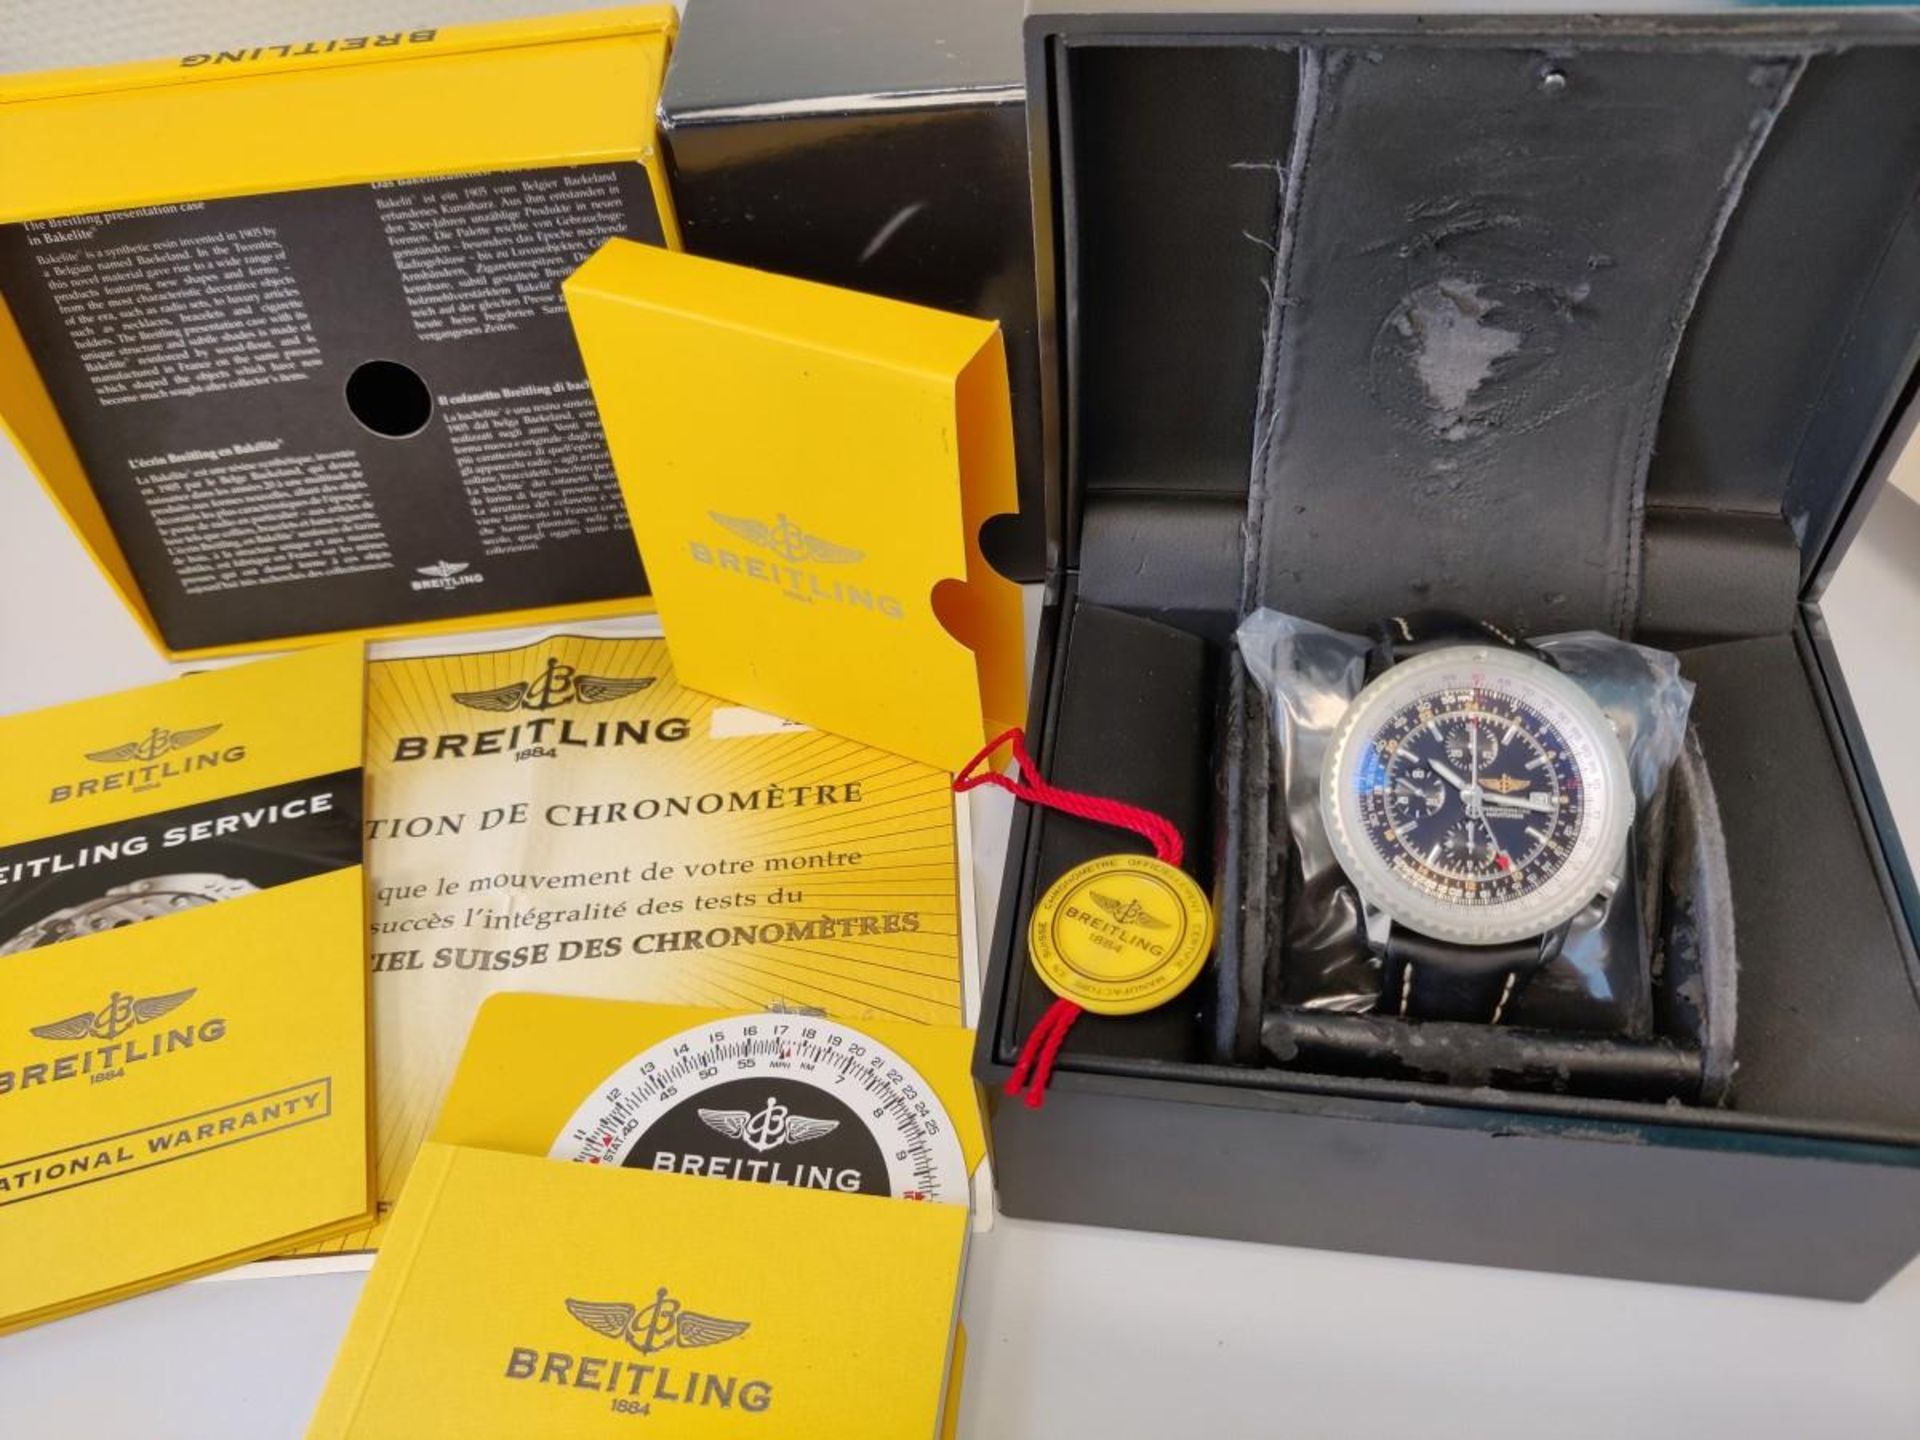 Breitling Navitimer A24322 - Men's watch - 2007. - Image 6 of 6